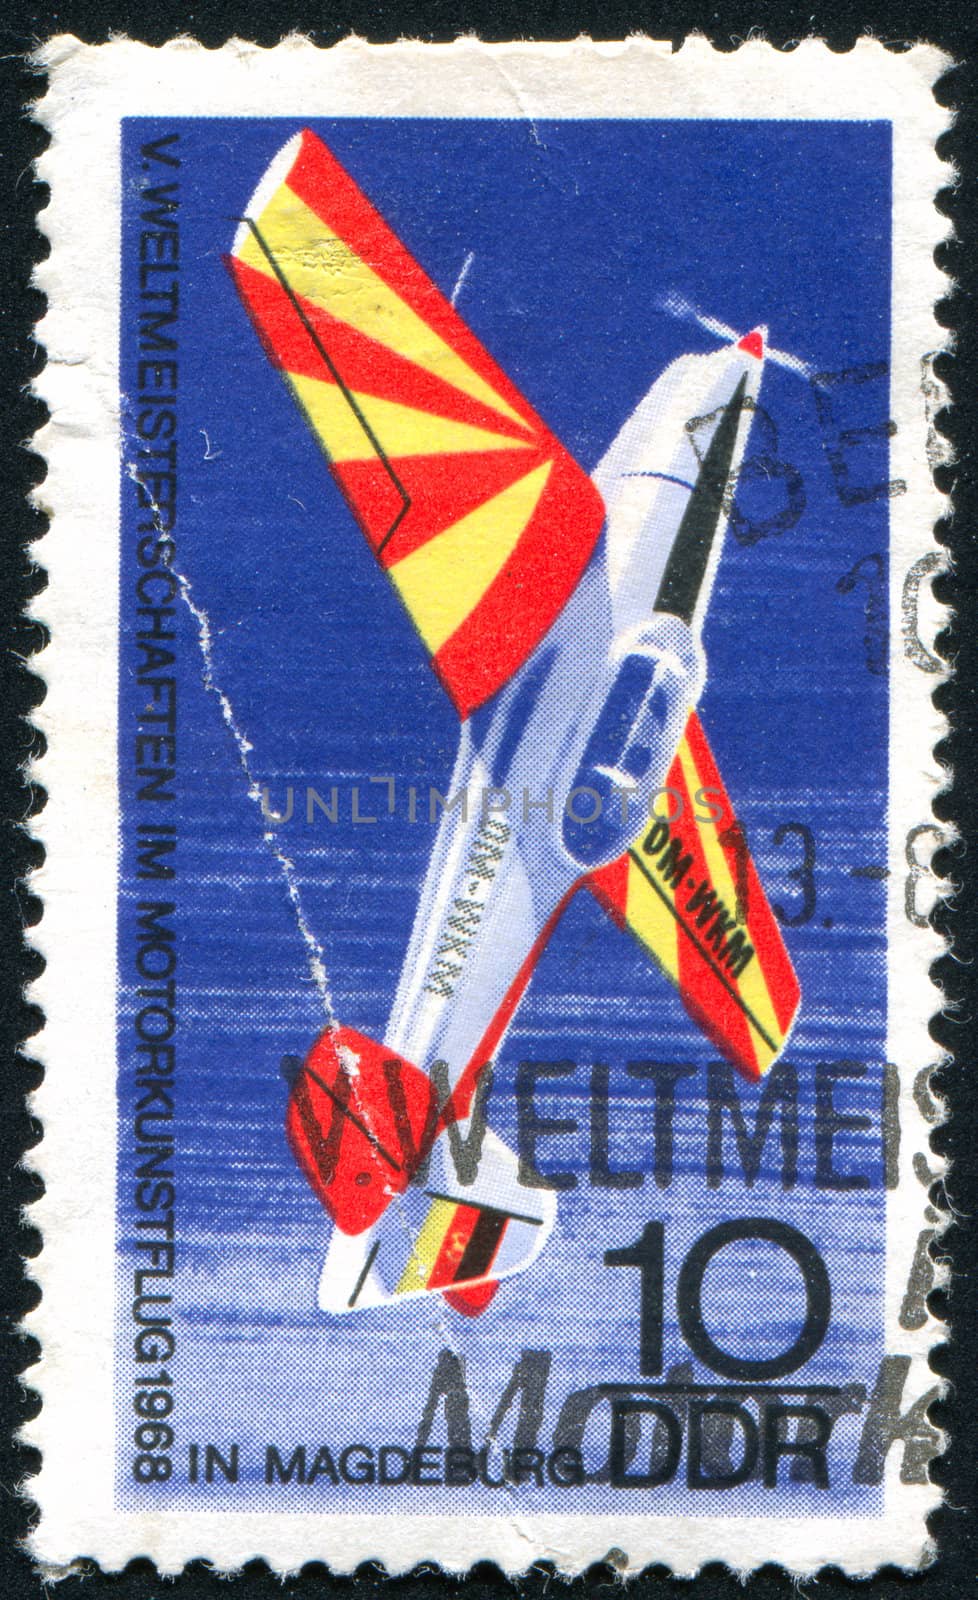 GERMANY - CIRCA 1968: stamp printed by Germany, shows �Trener� Stunt Plane, circa 1968